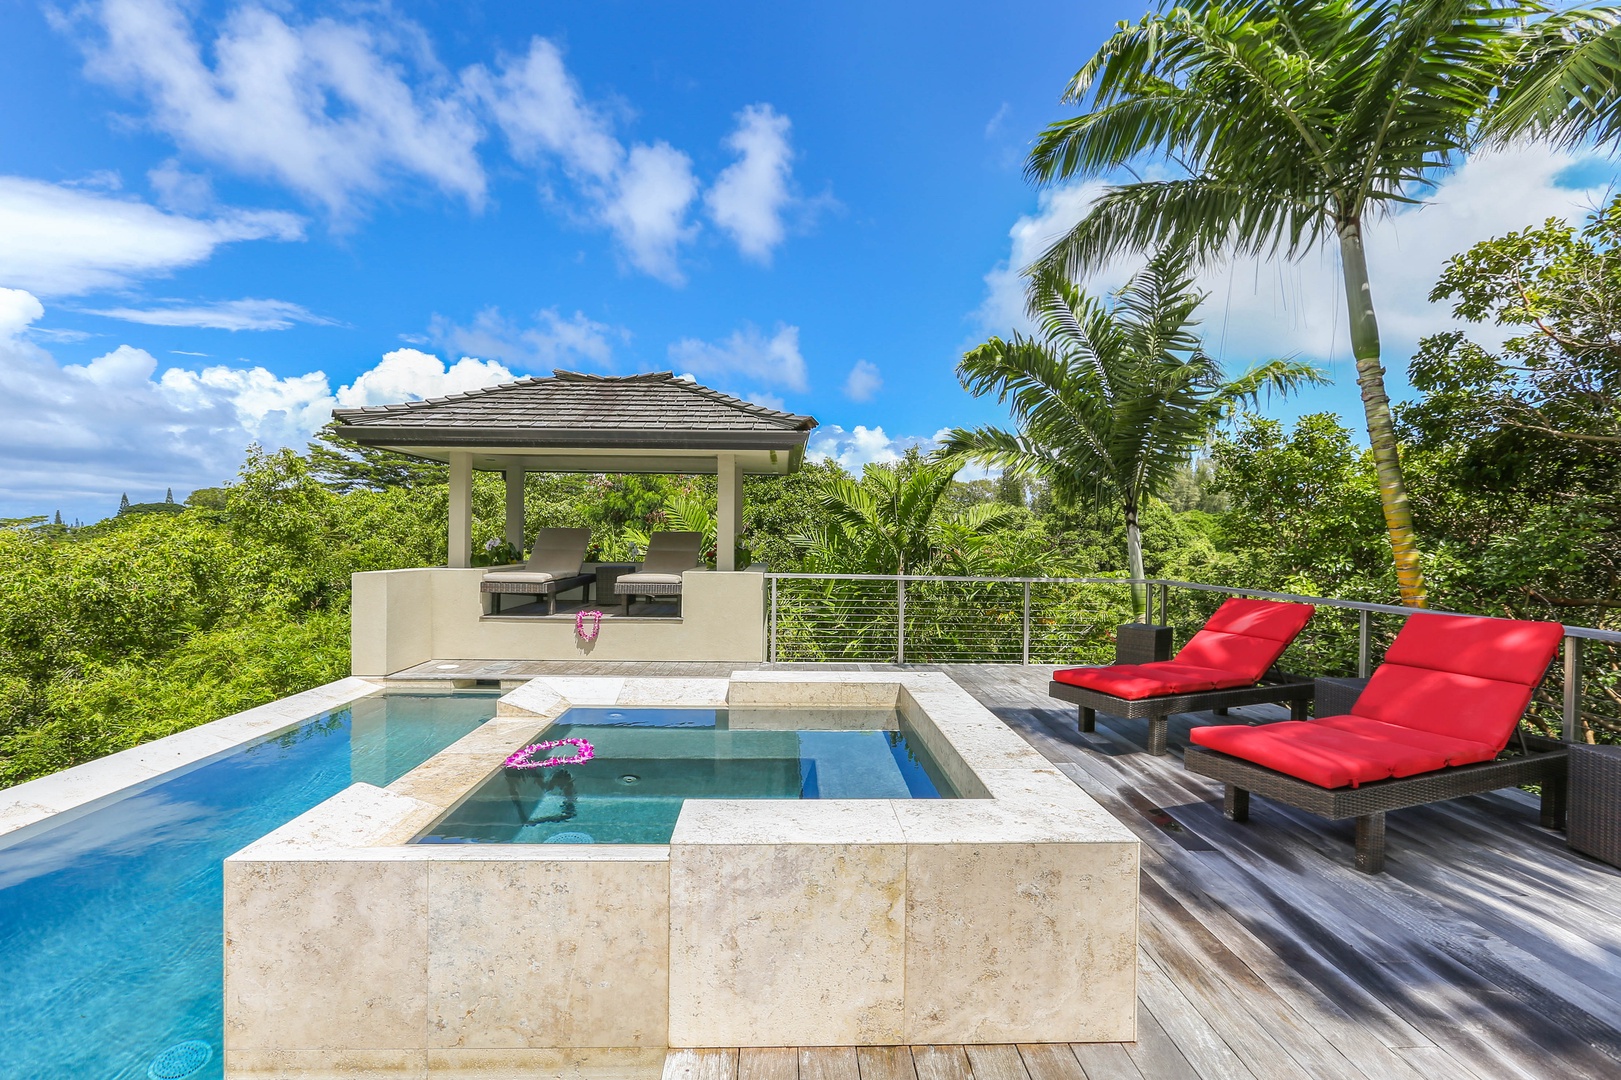 Princeville Vacation Rentals, Laulea Kailani Villa (KAUAI) - Enjoy the private pool and spa!